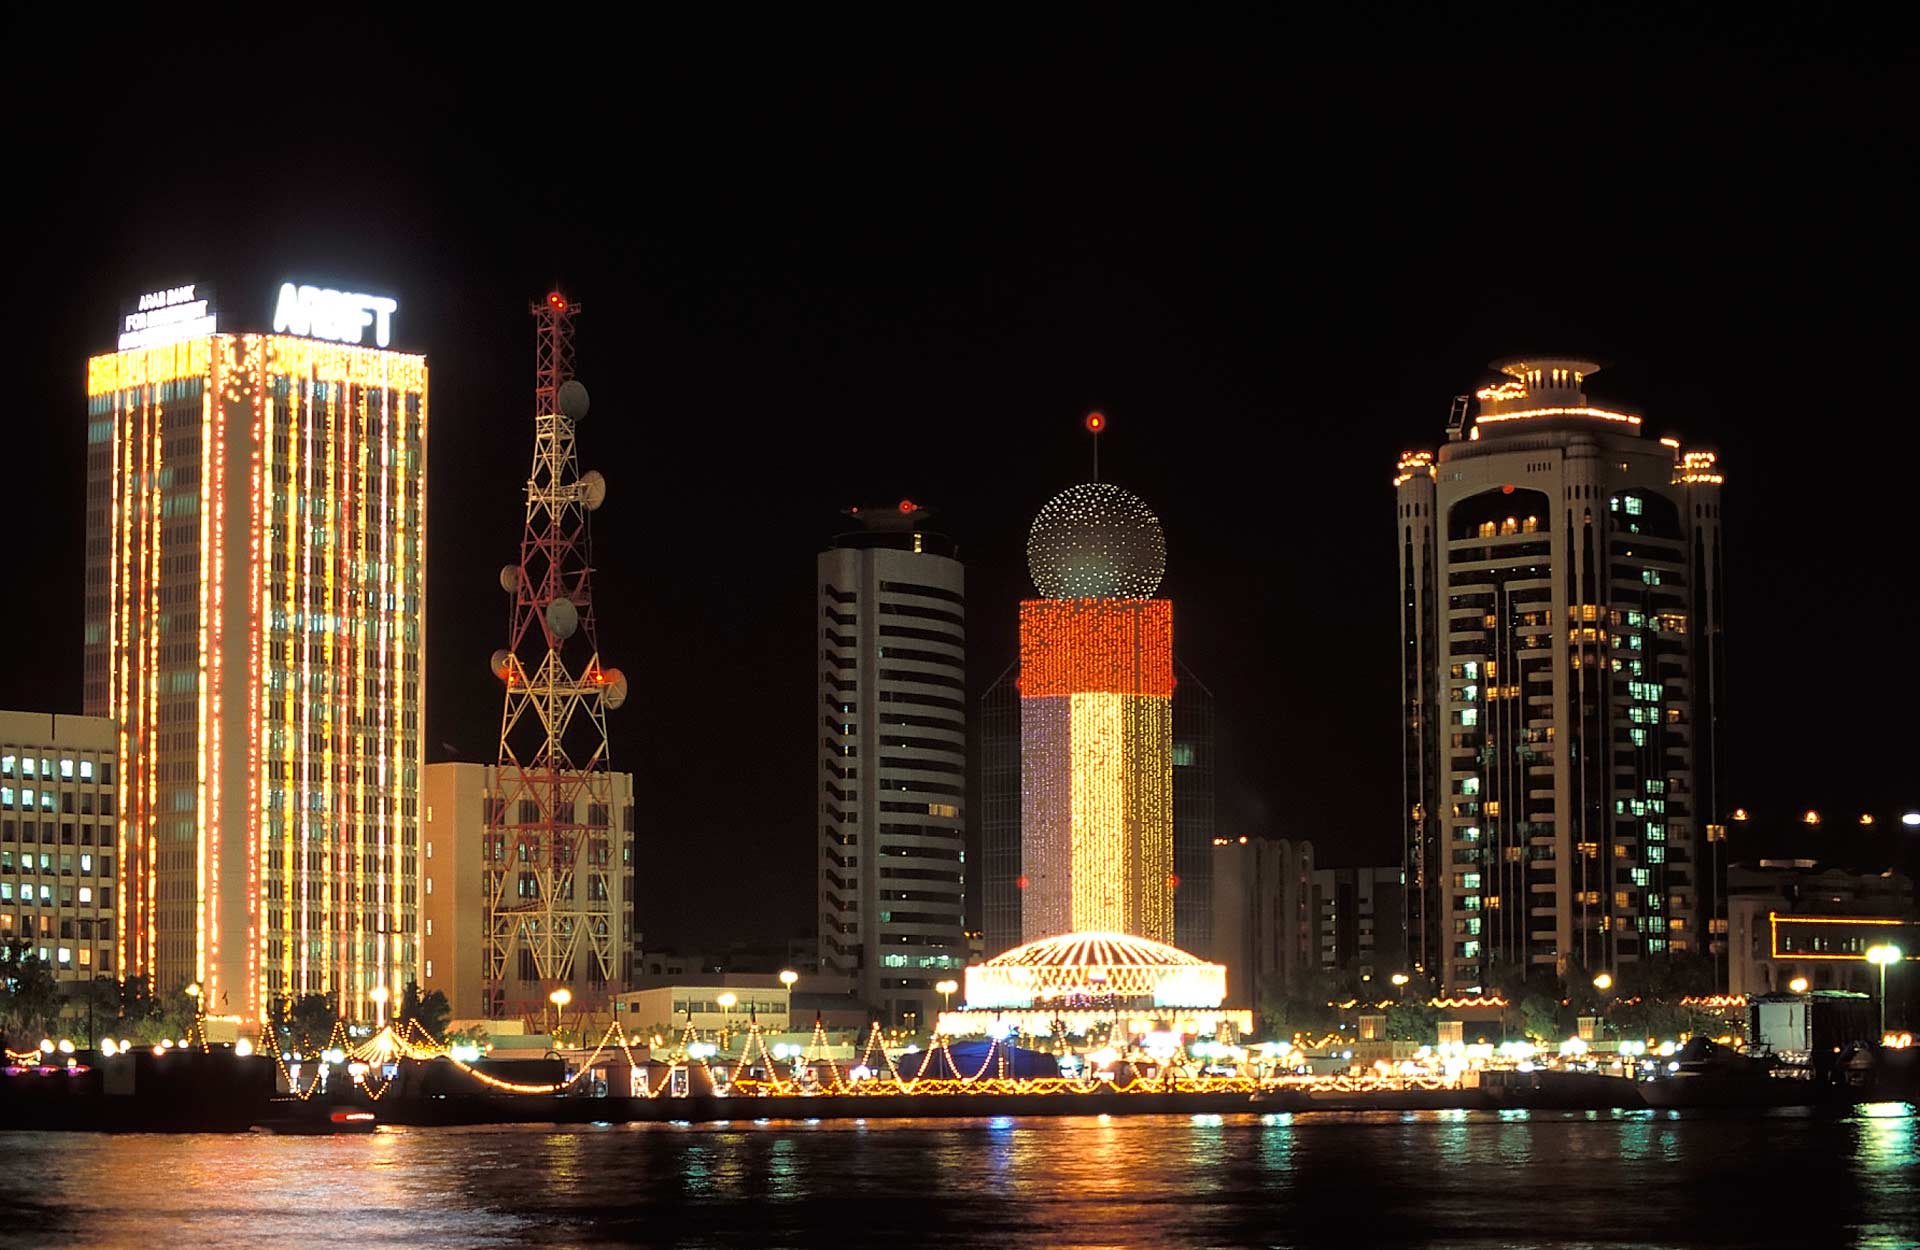 ARBIFT Building, Etisalat Building, Dubai Creek Tower at night, Dubai, United Arab Emirates